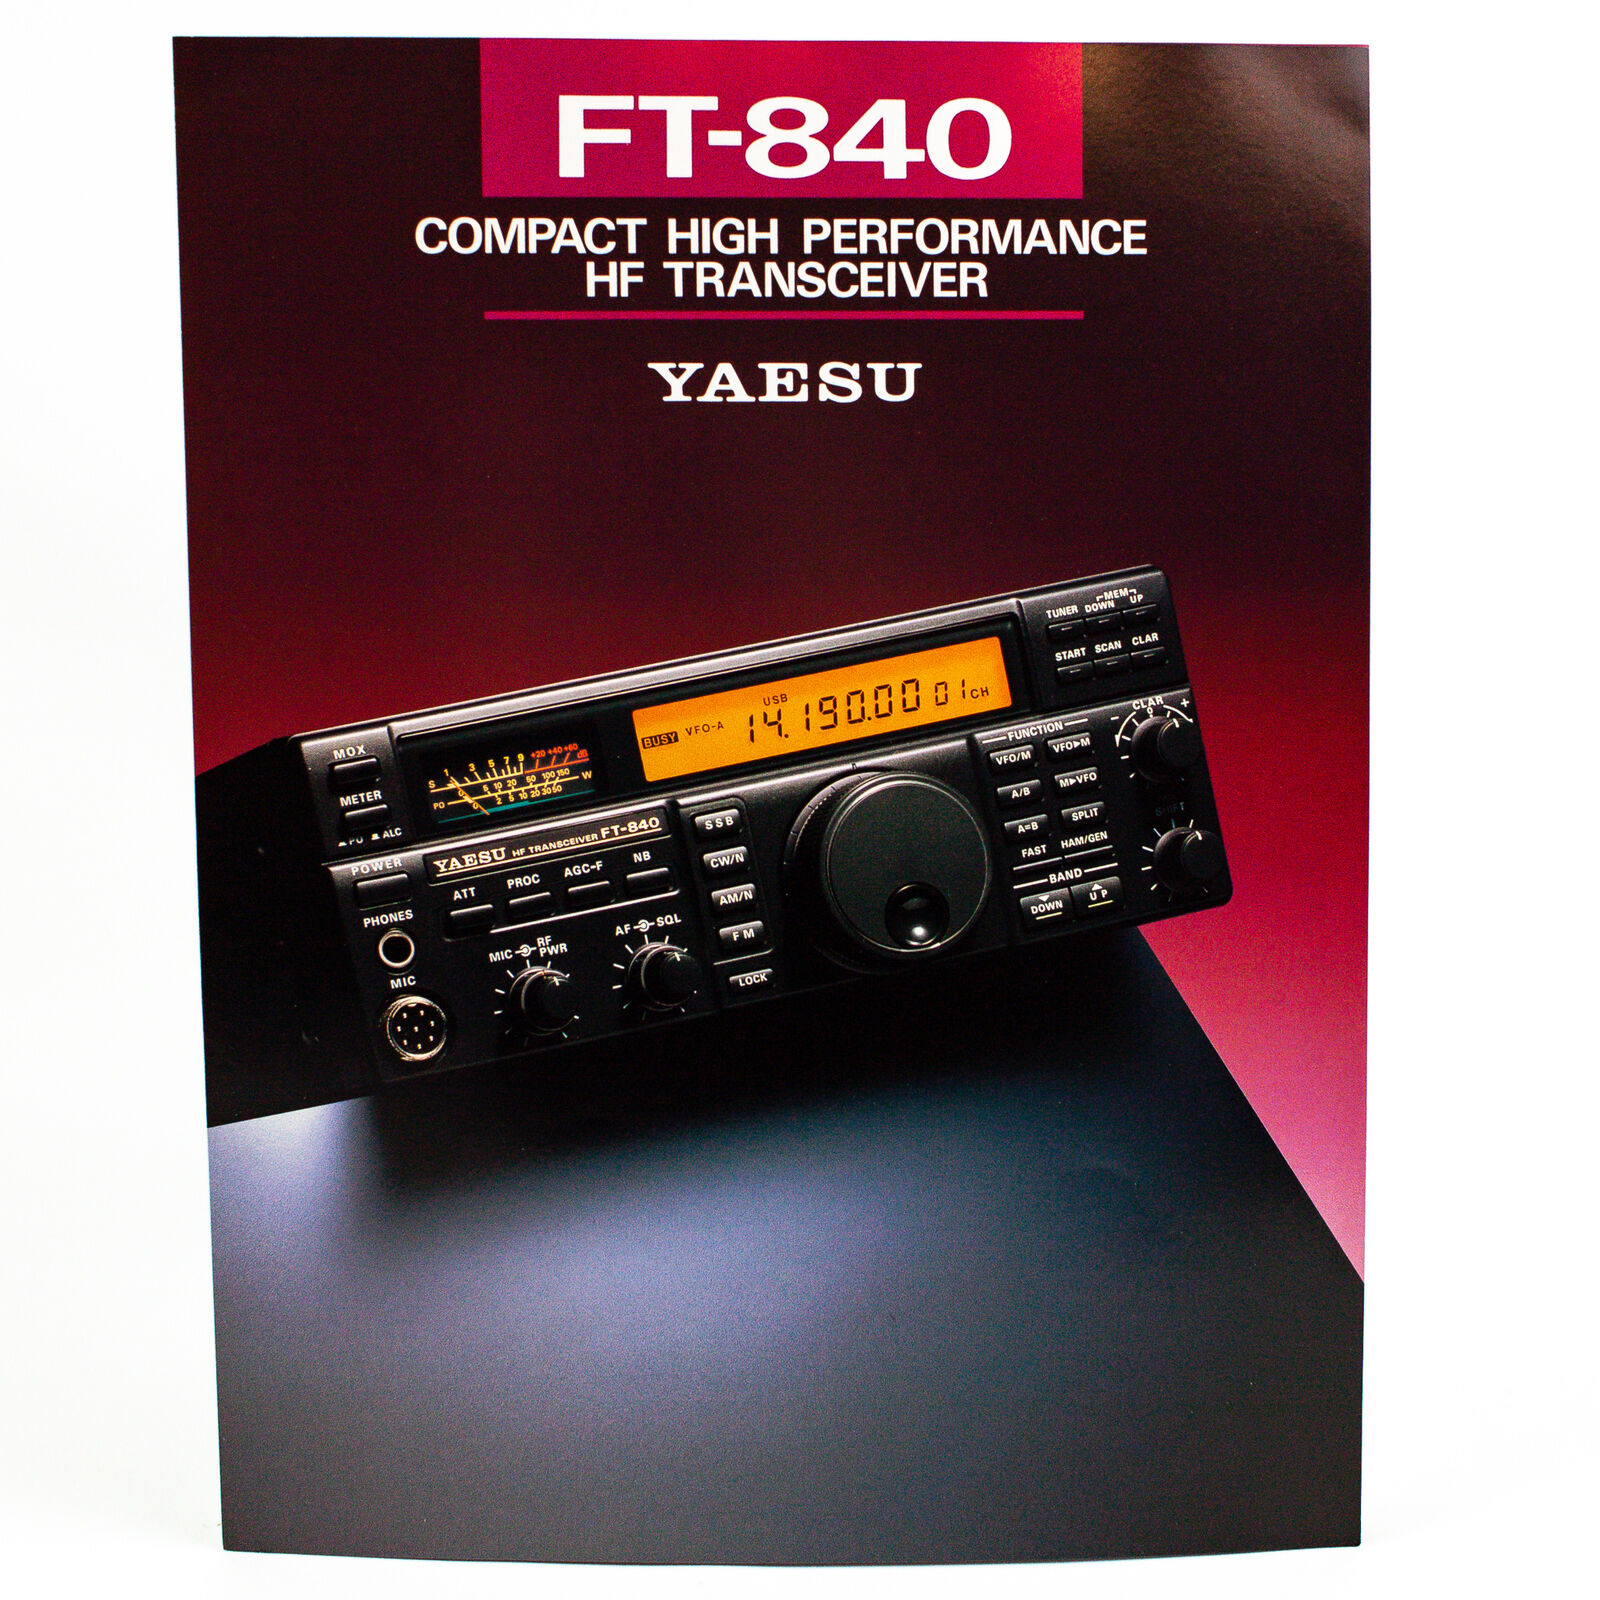 Yaesu FT-840 All Mode Transceiver Brochure - Compact Performance HF Transceiver